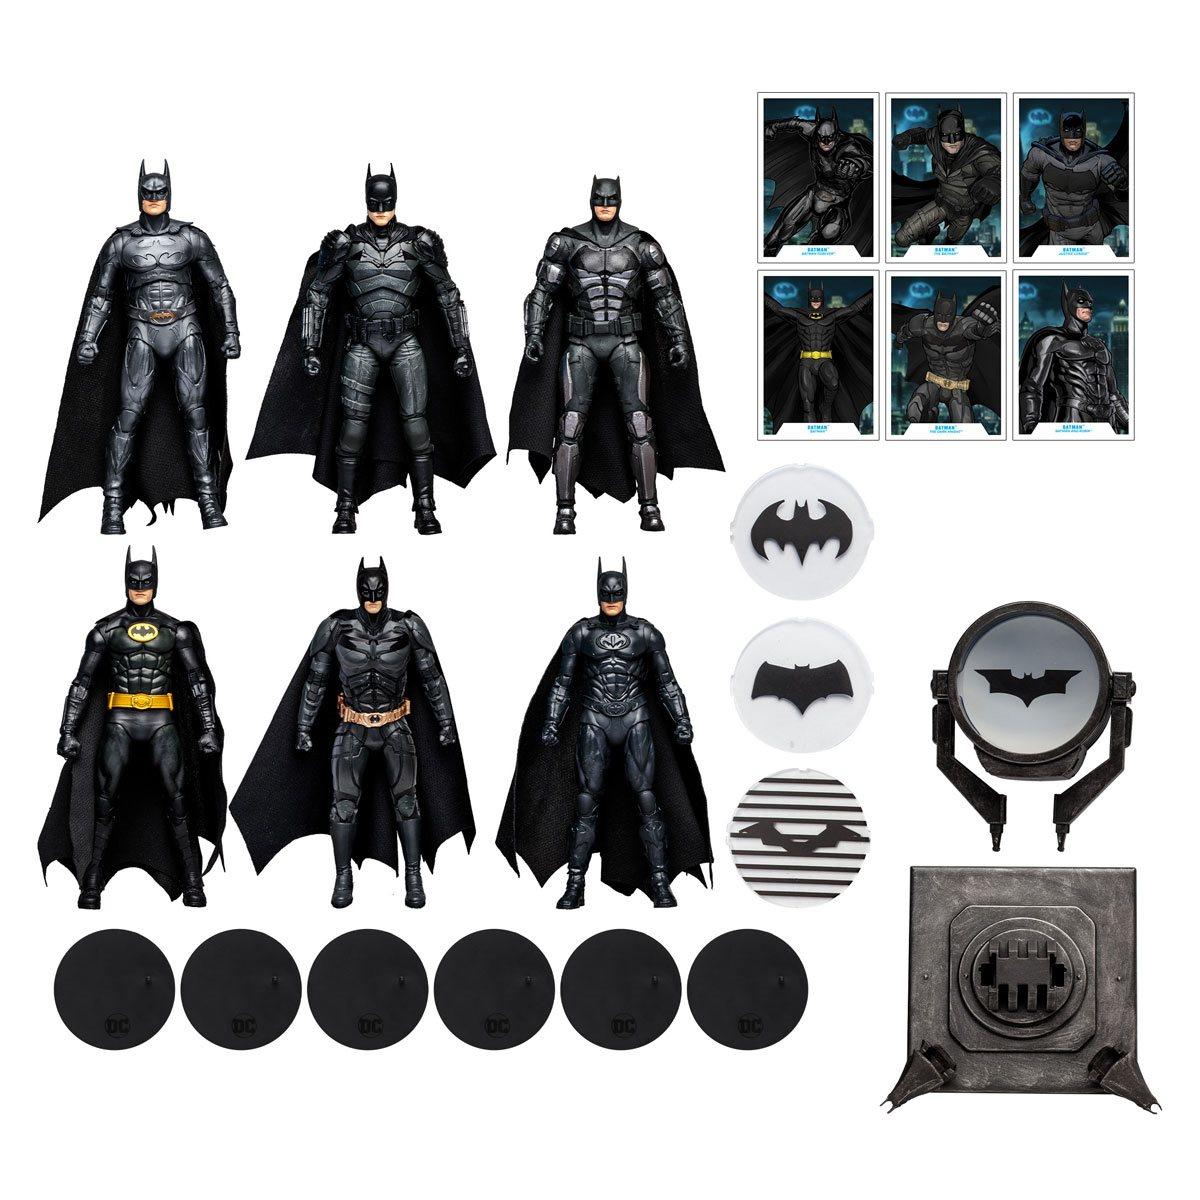 Dc comics - figurine - batman - pack batmobile et figurine batman